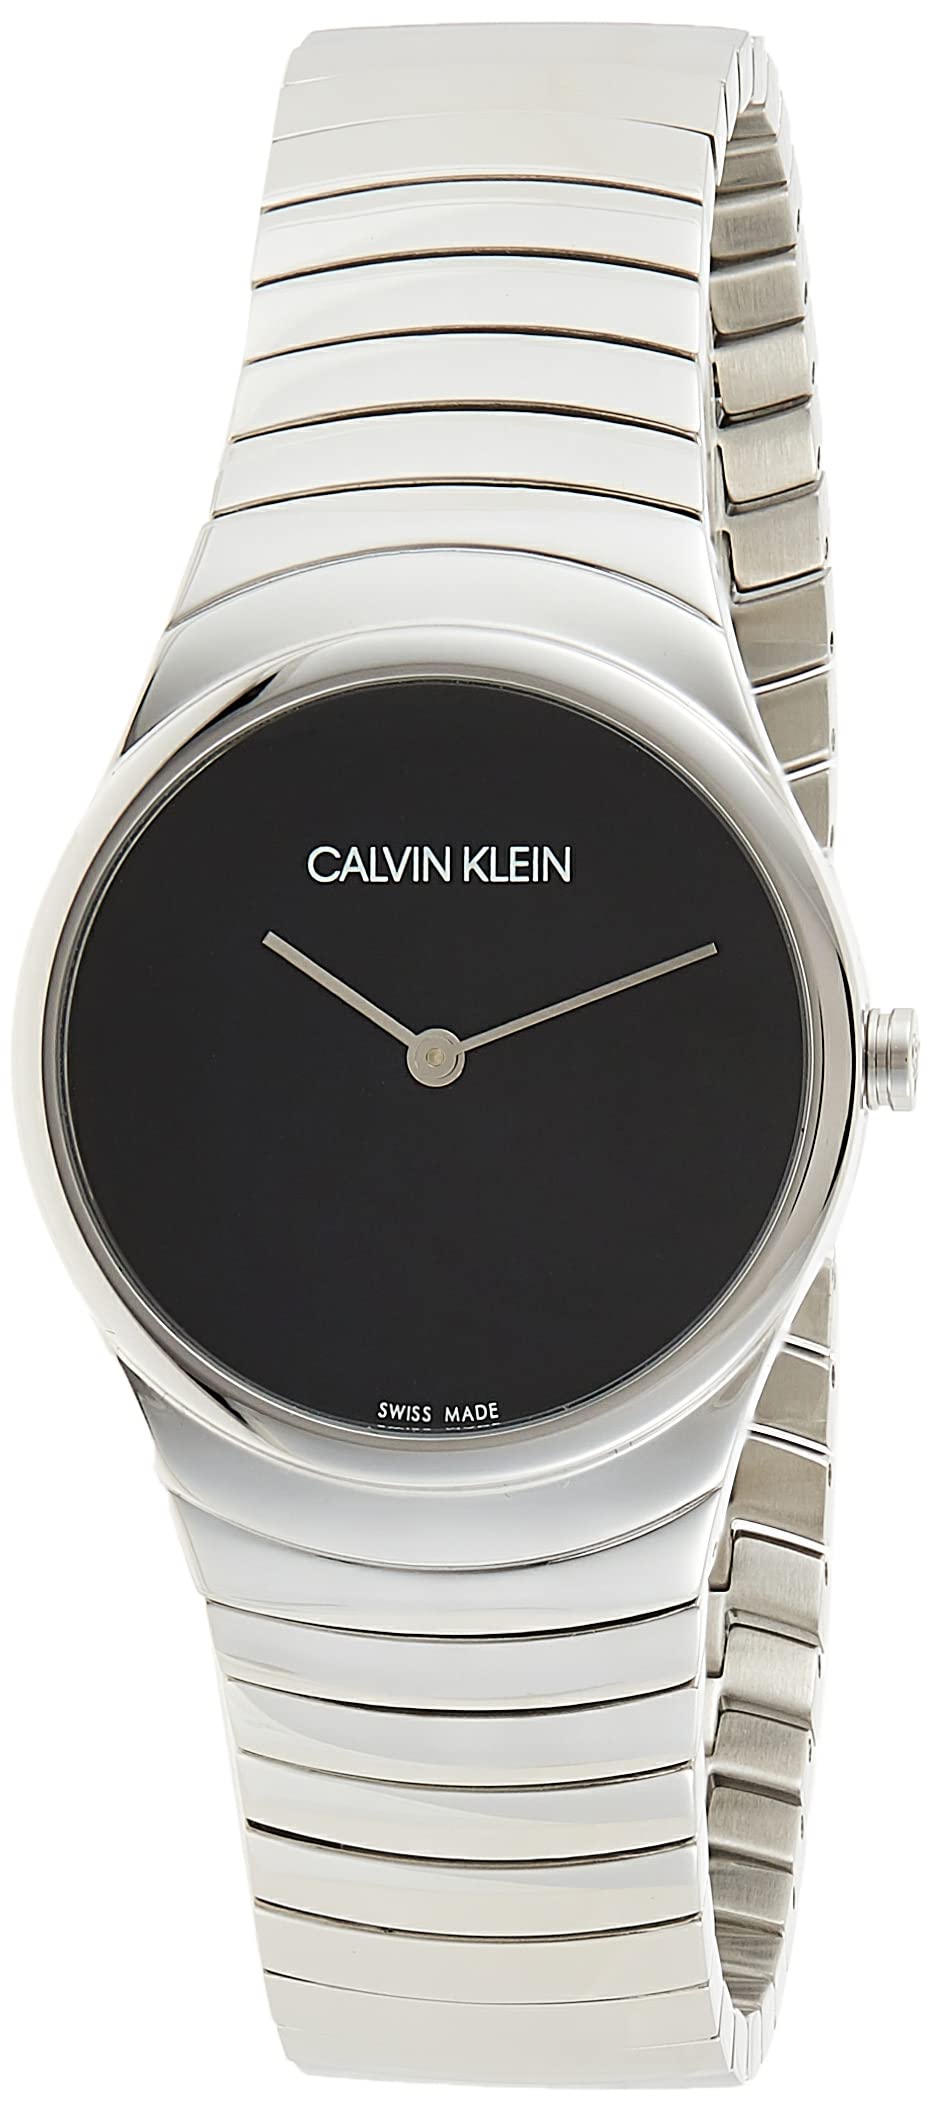 Calvin Klein Damen Analog Quarz Uhr mit Edelstahl Armband K8A23141